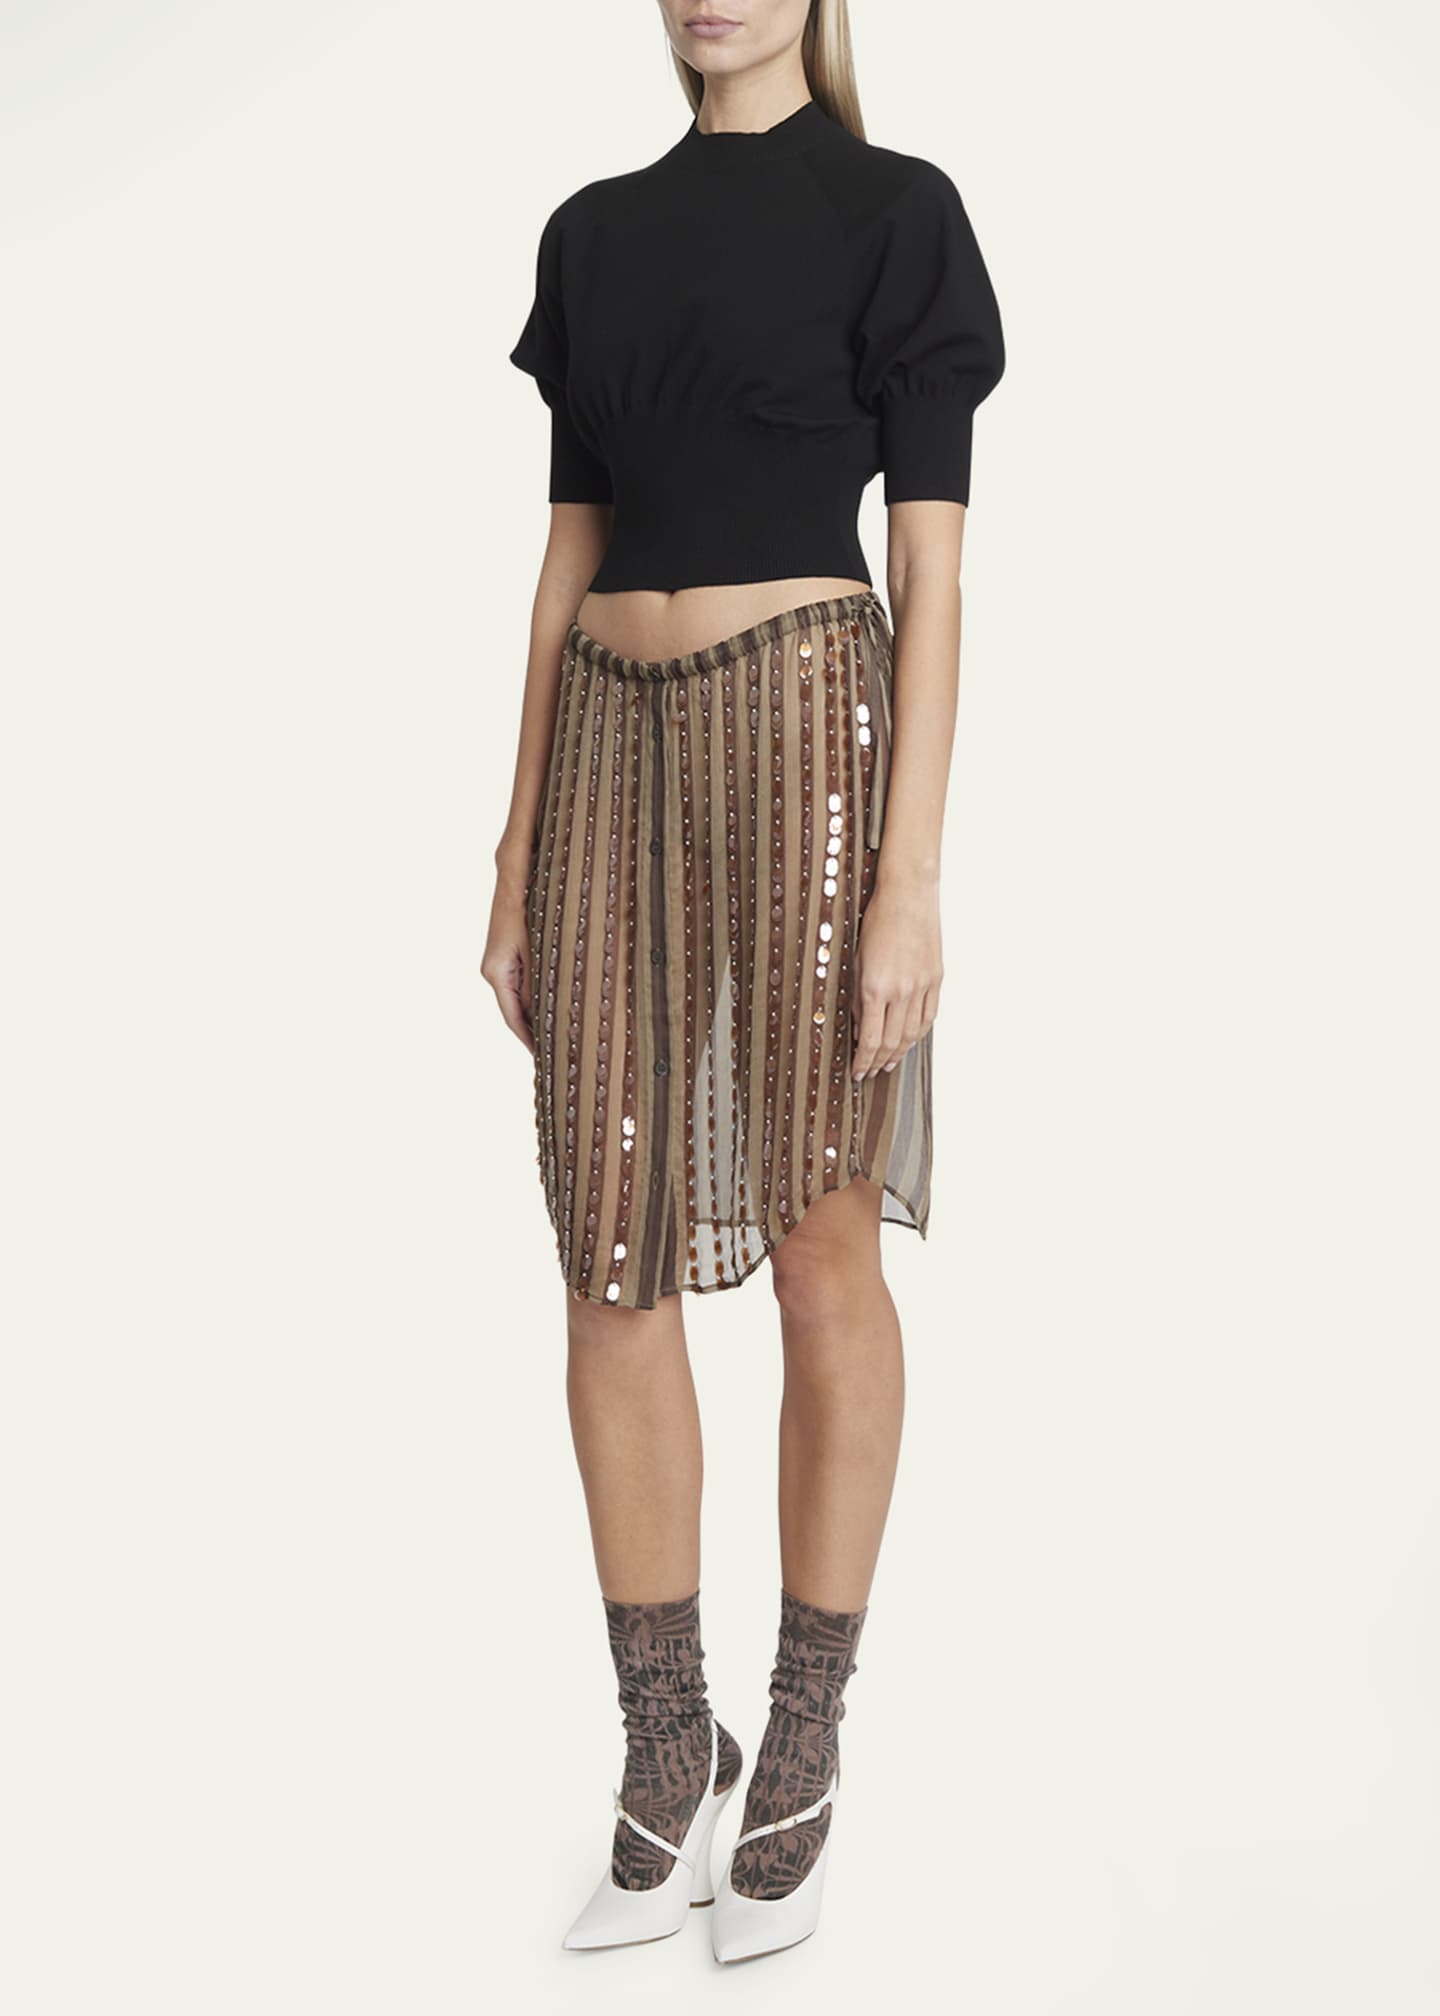 Dries Van Noten Shirty Embellished Sheer Midi Skirt